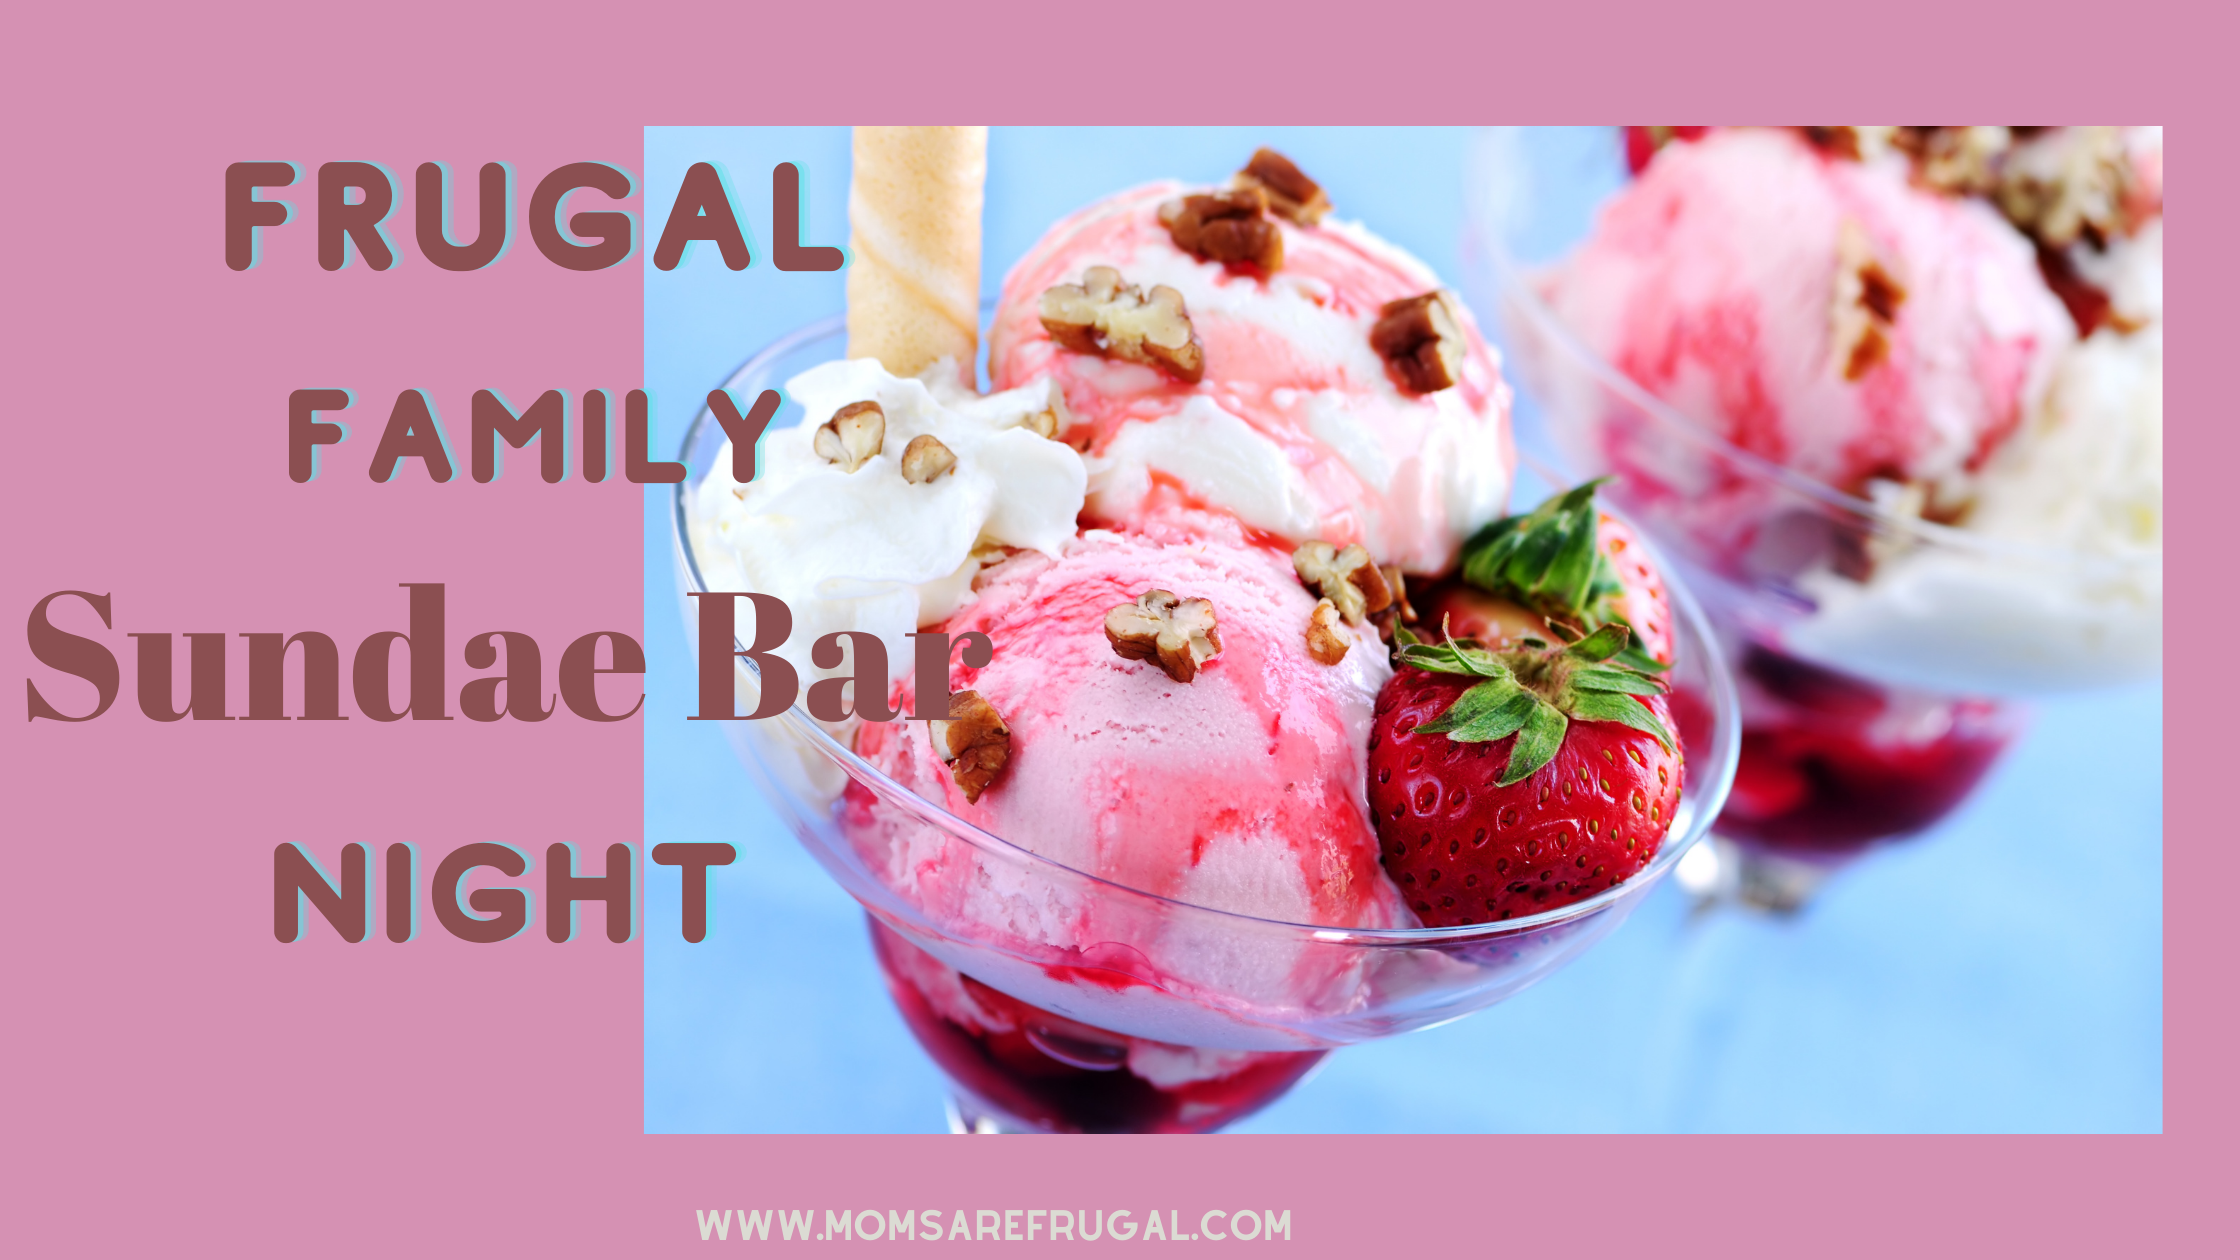 Frugal Family Sundae Bar Night